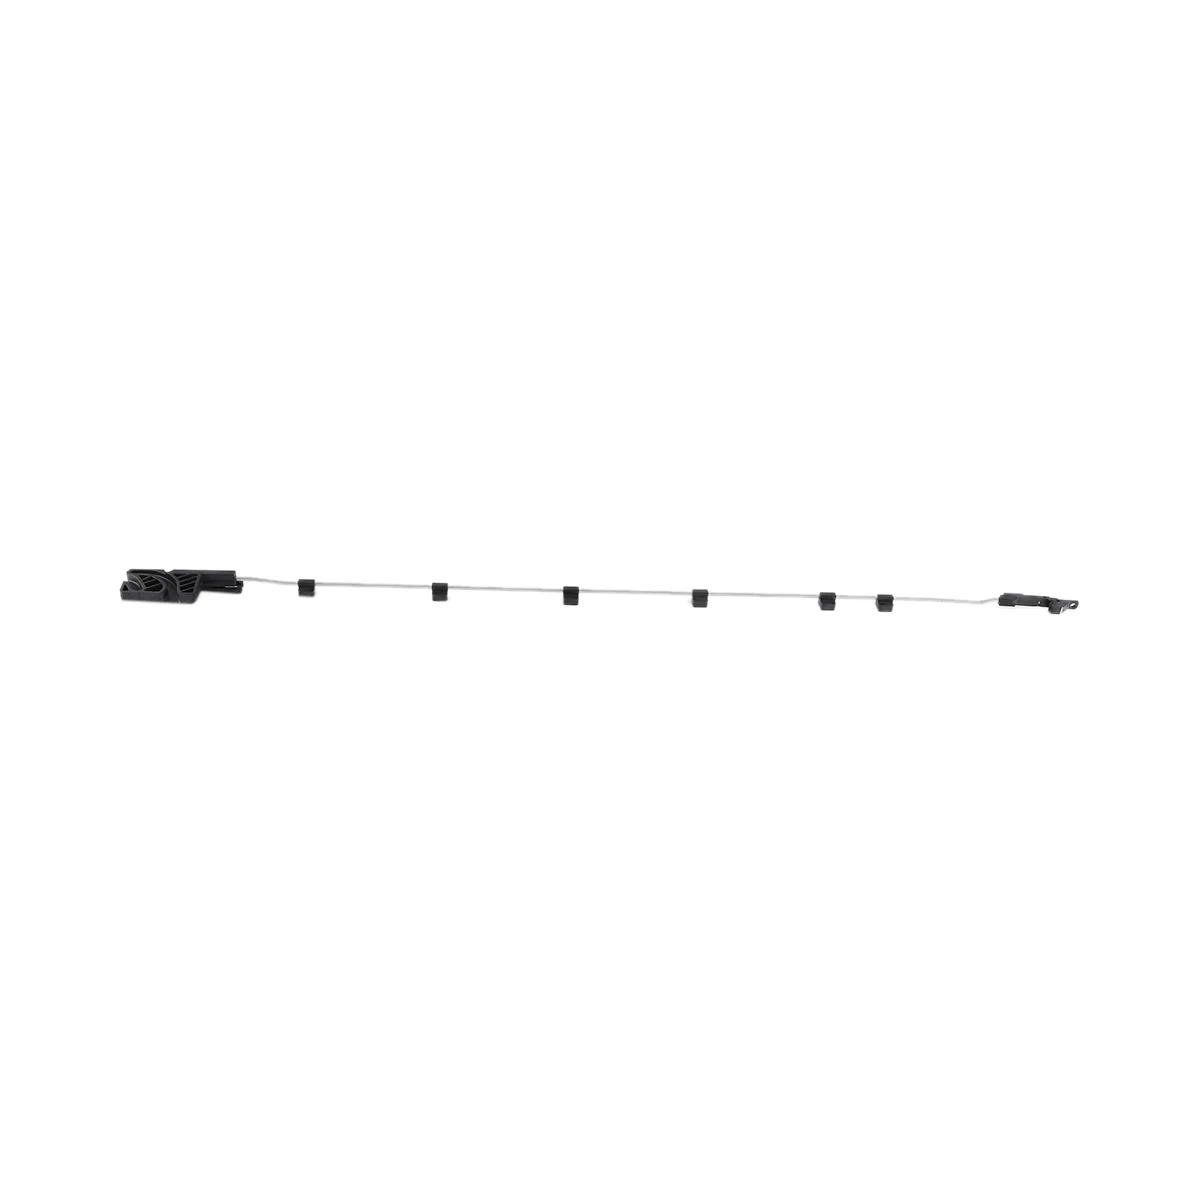 

Car Sunroof Guide Rail Frame Track for Mercedes-Benz C-CLASS 213 Slide Skylight Guide Cable Bracket, Left